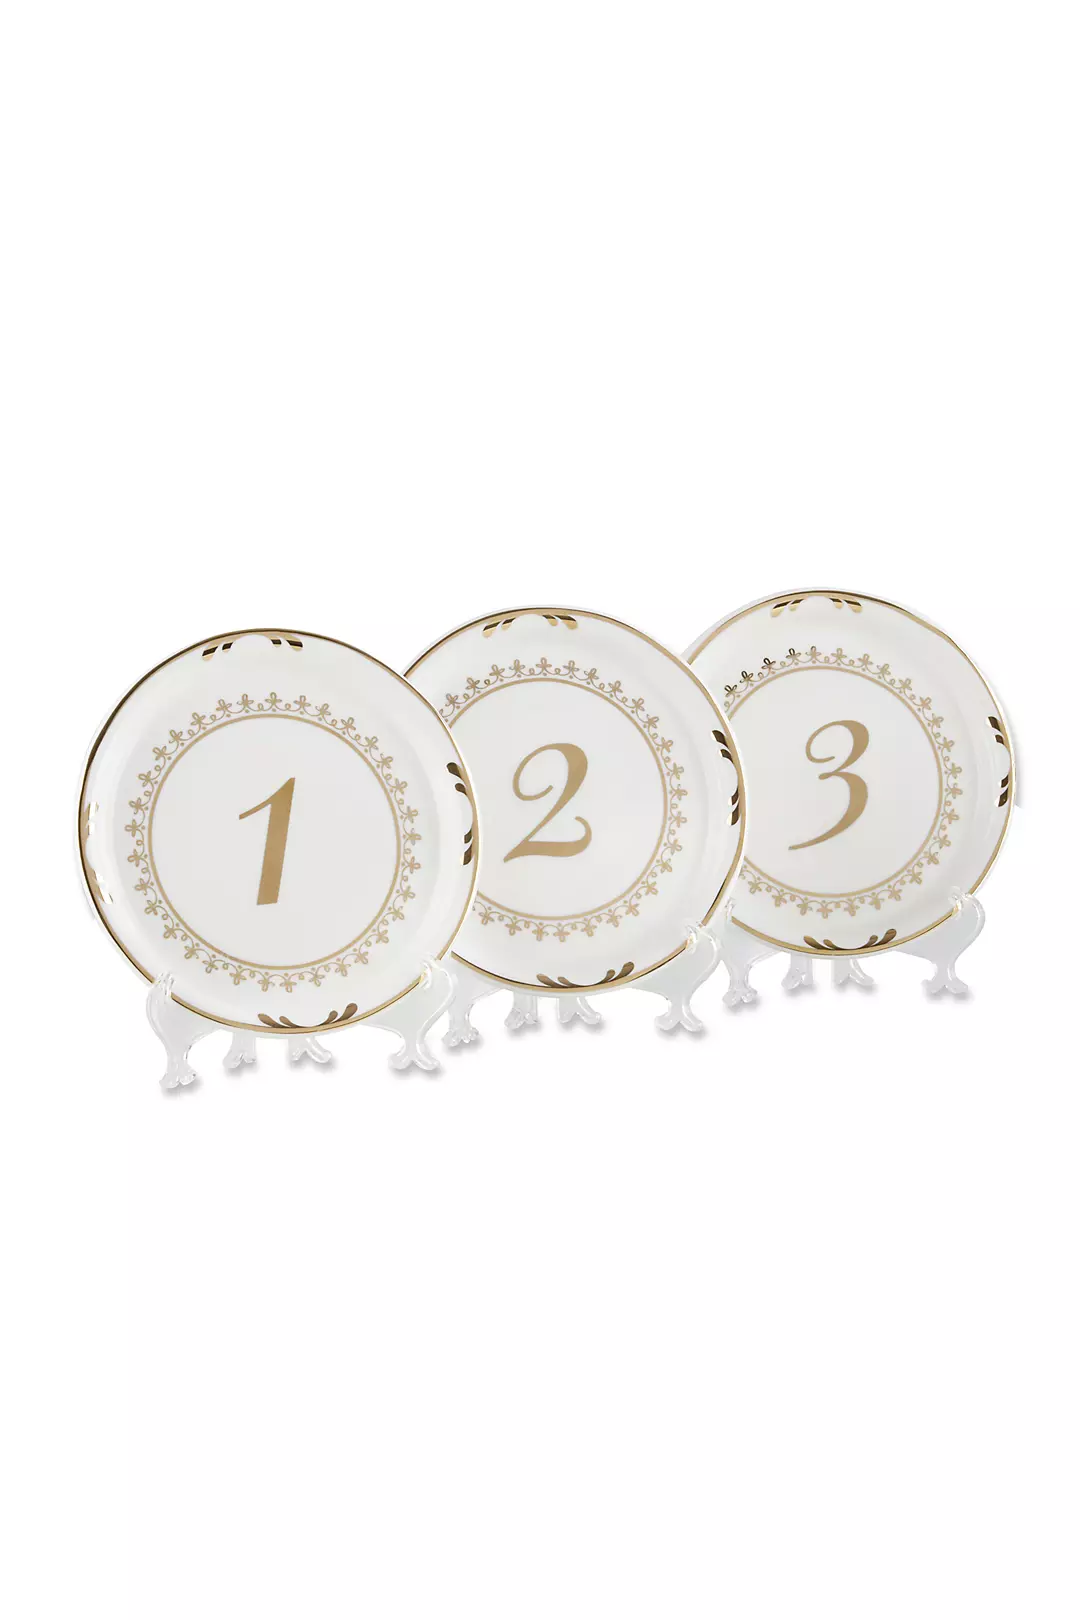 Tea Time Vintage Plate Table Numbers Set of 6 Image